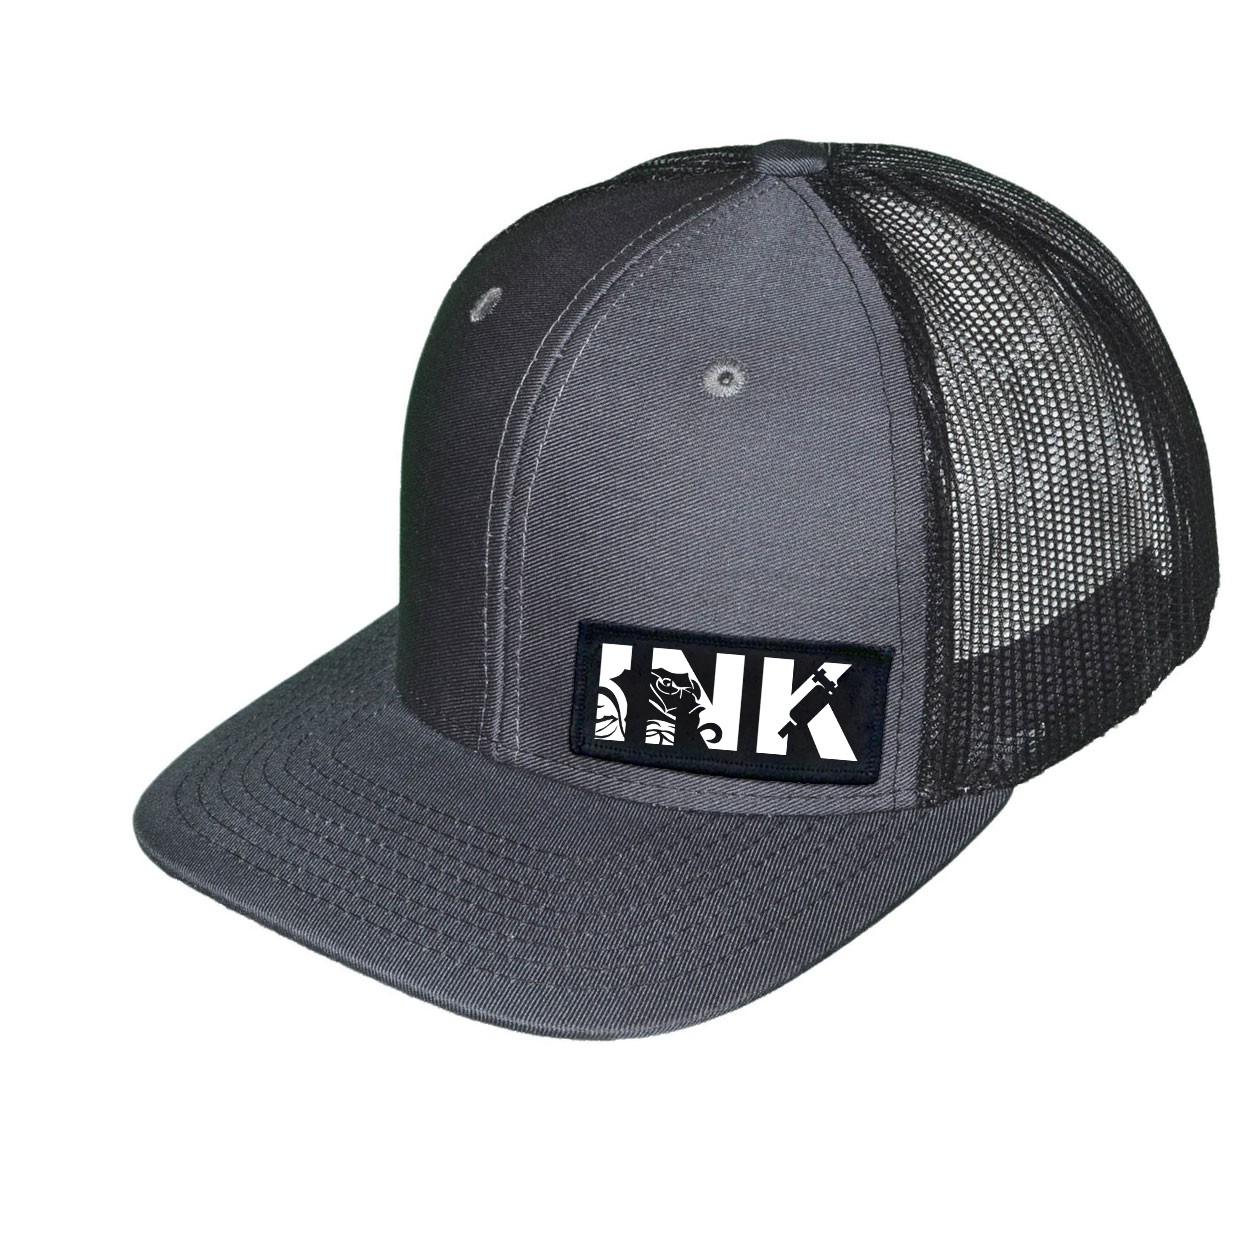 Ink Tattoo Logo Night Out Woven Patch Snapback Trucker Hat Dark Gray/Black